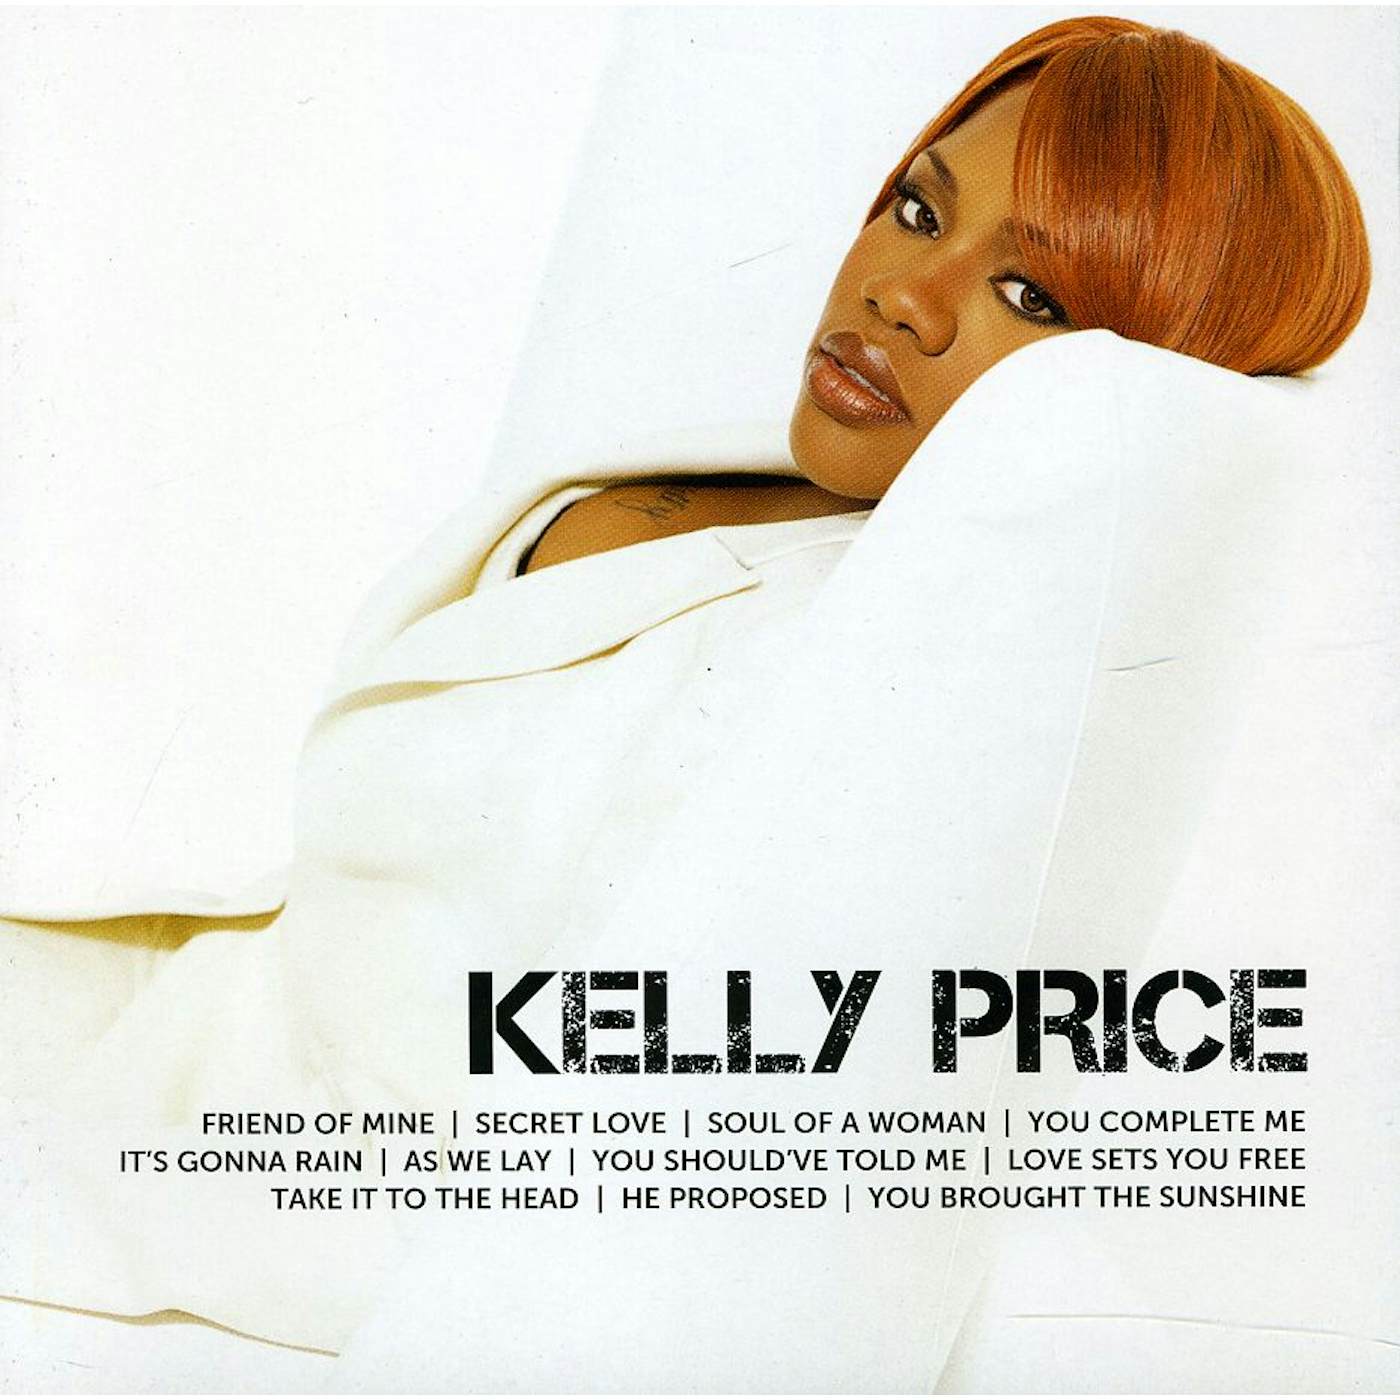 Kelly Price ICON CD